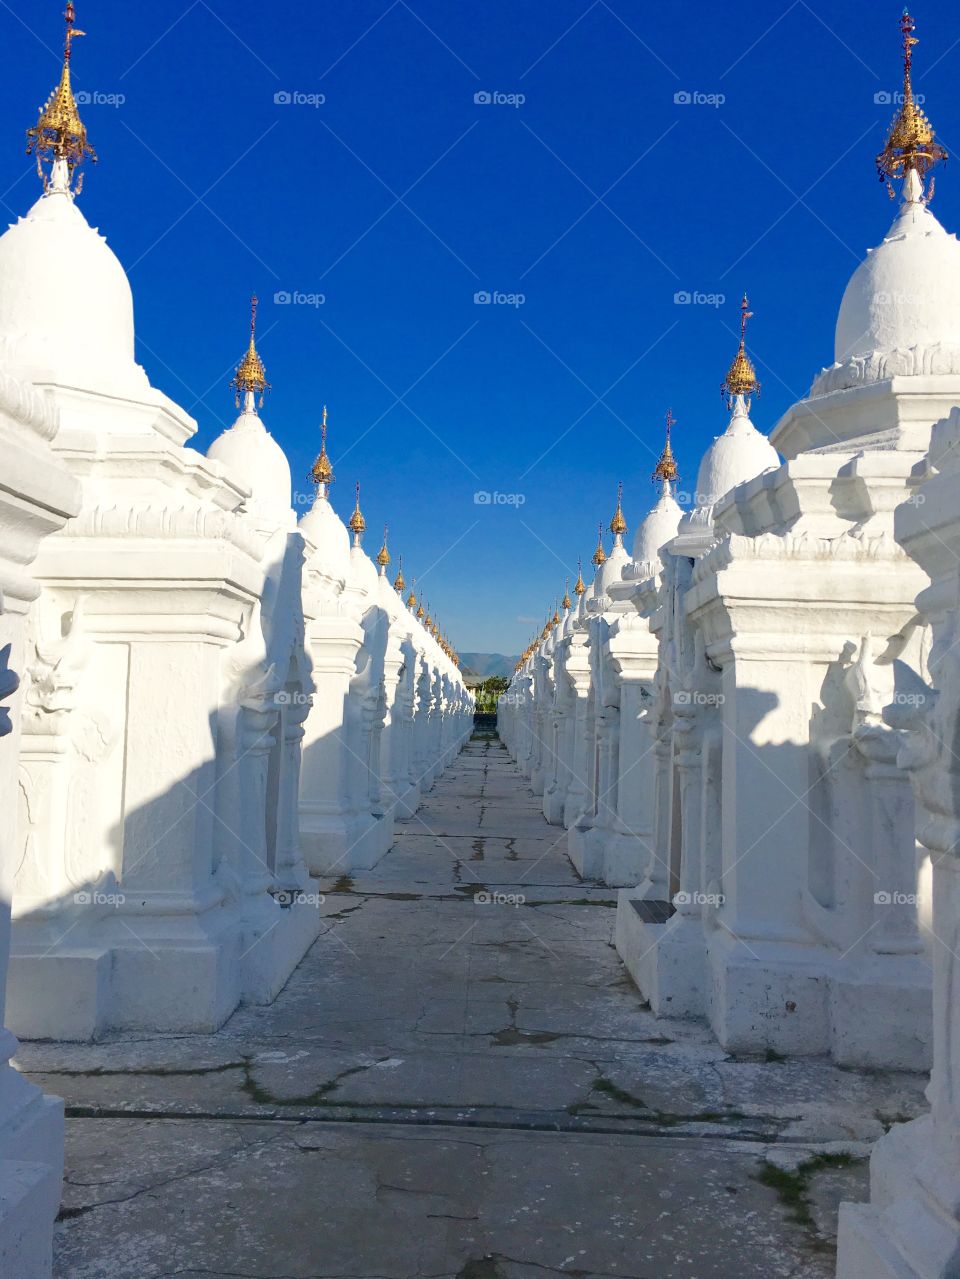 White pagodas in Mandalay, Myanmar 